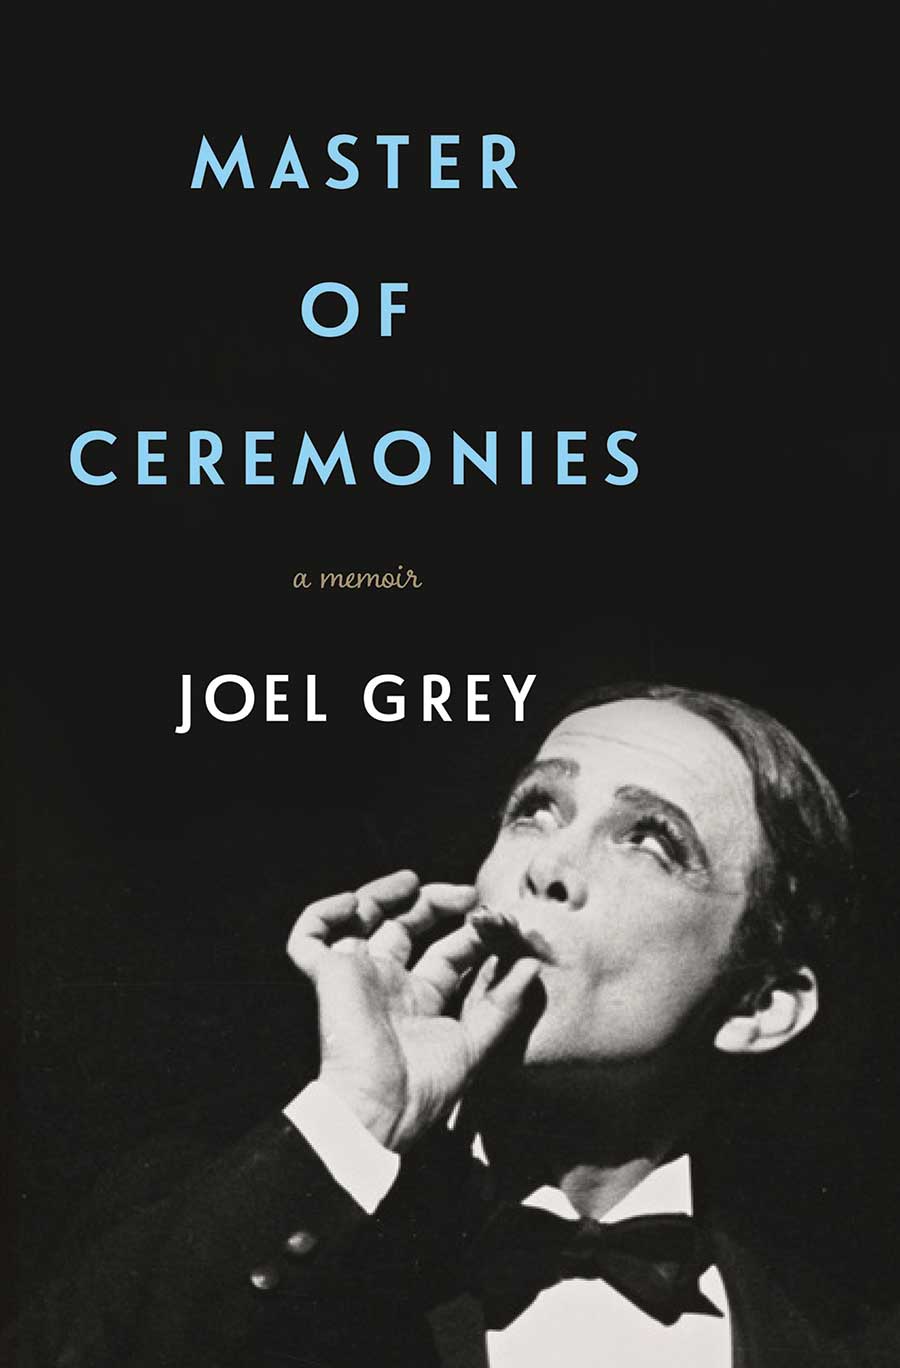 "Master of Ceremonies" by Joel Grey. Flatiron Books, New York, 2016. 256 pp., $27.99 cloth.